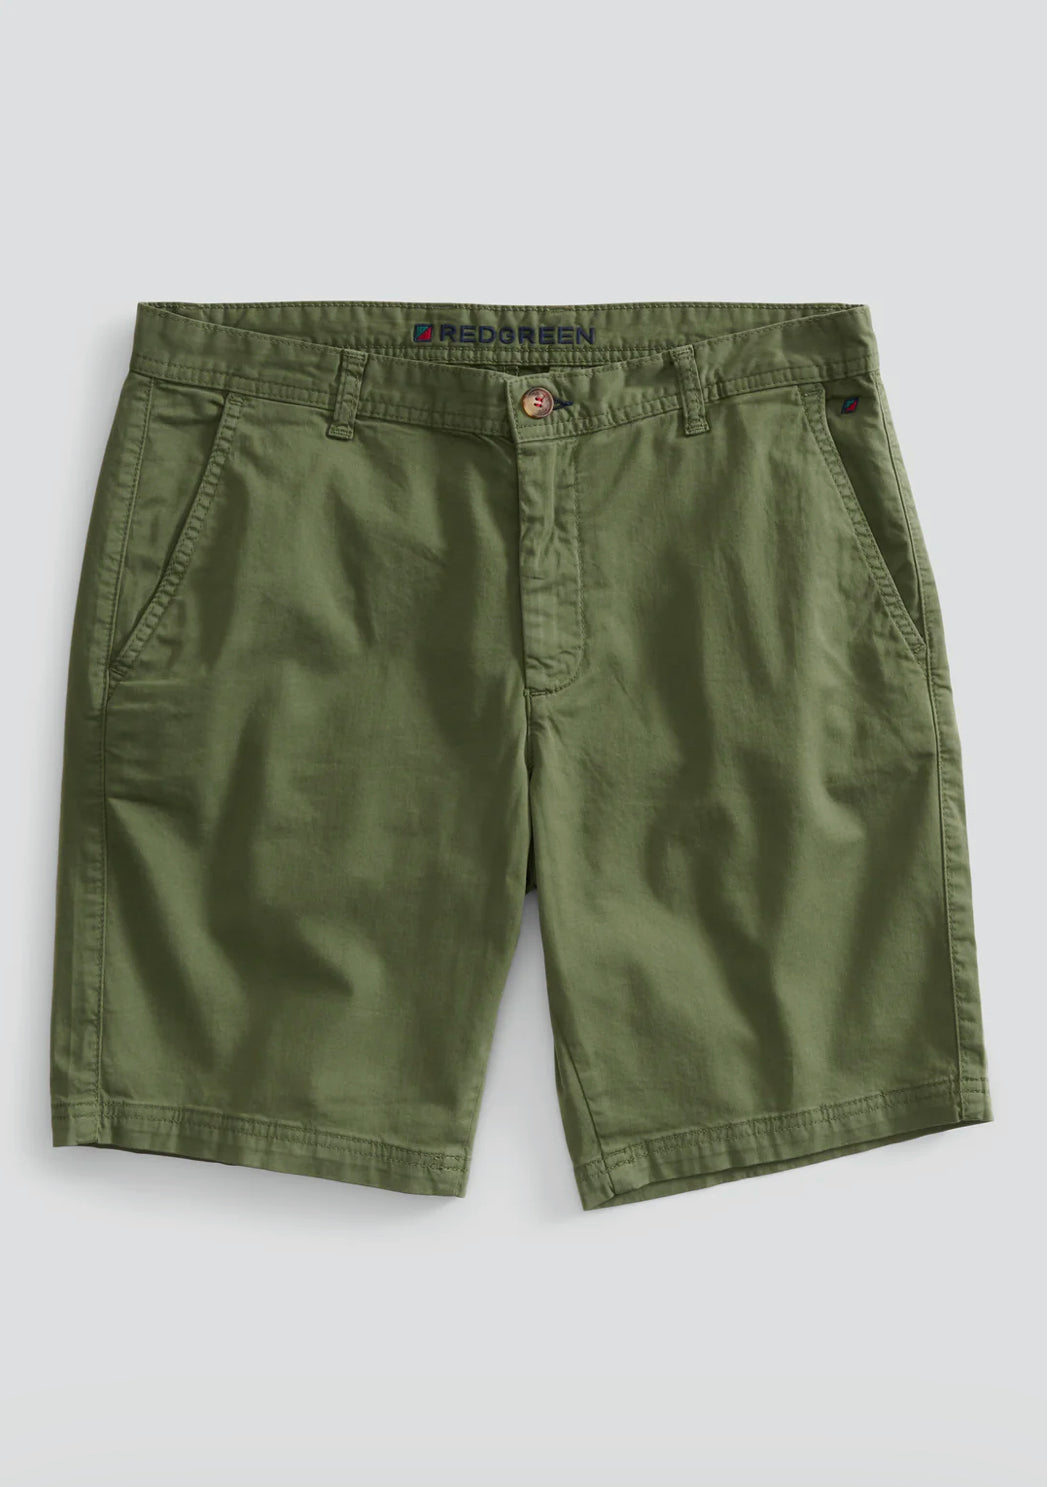 Redgreen Liam shorts